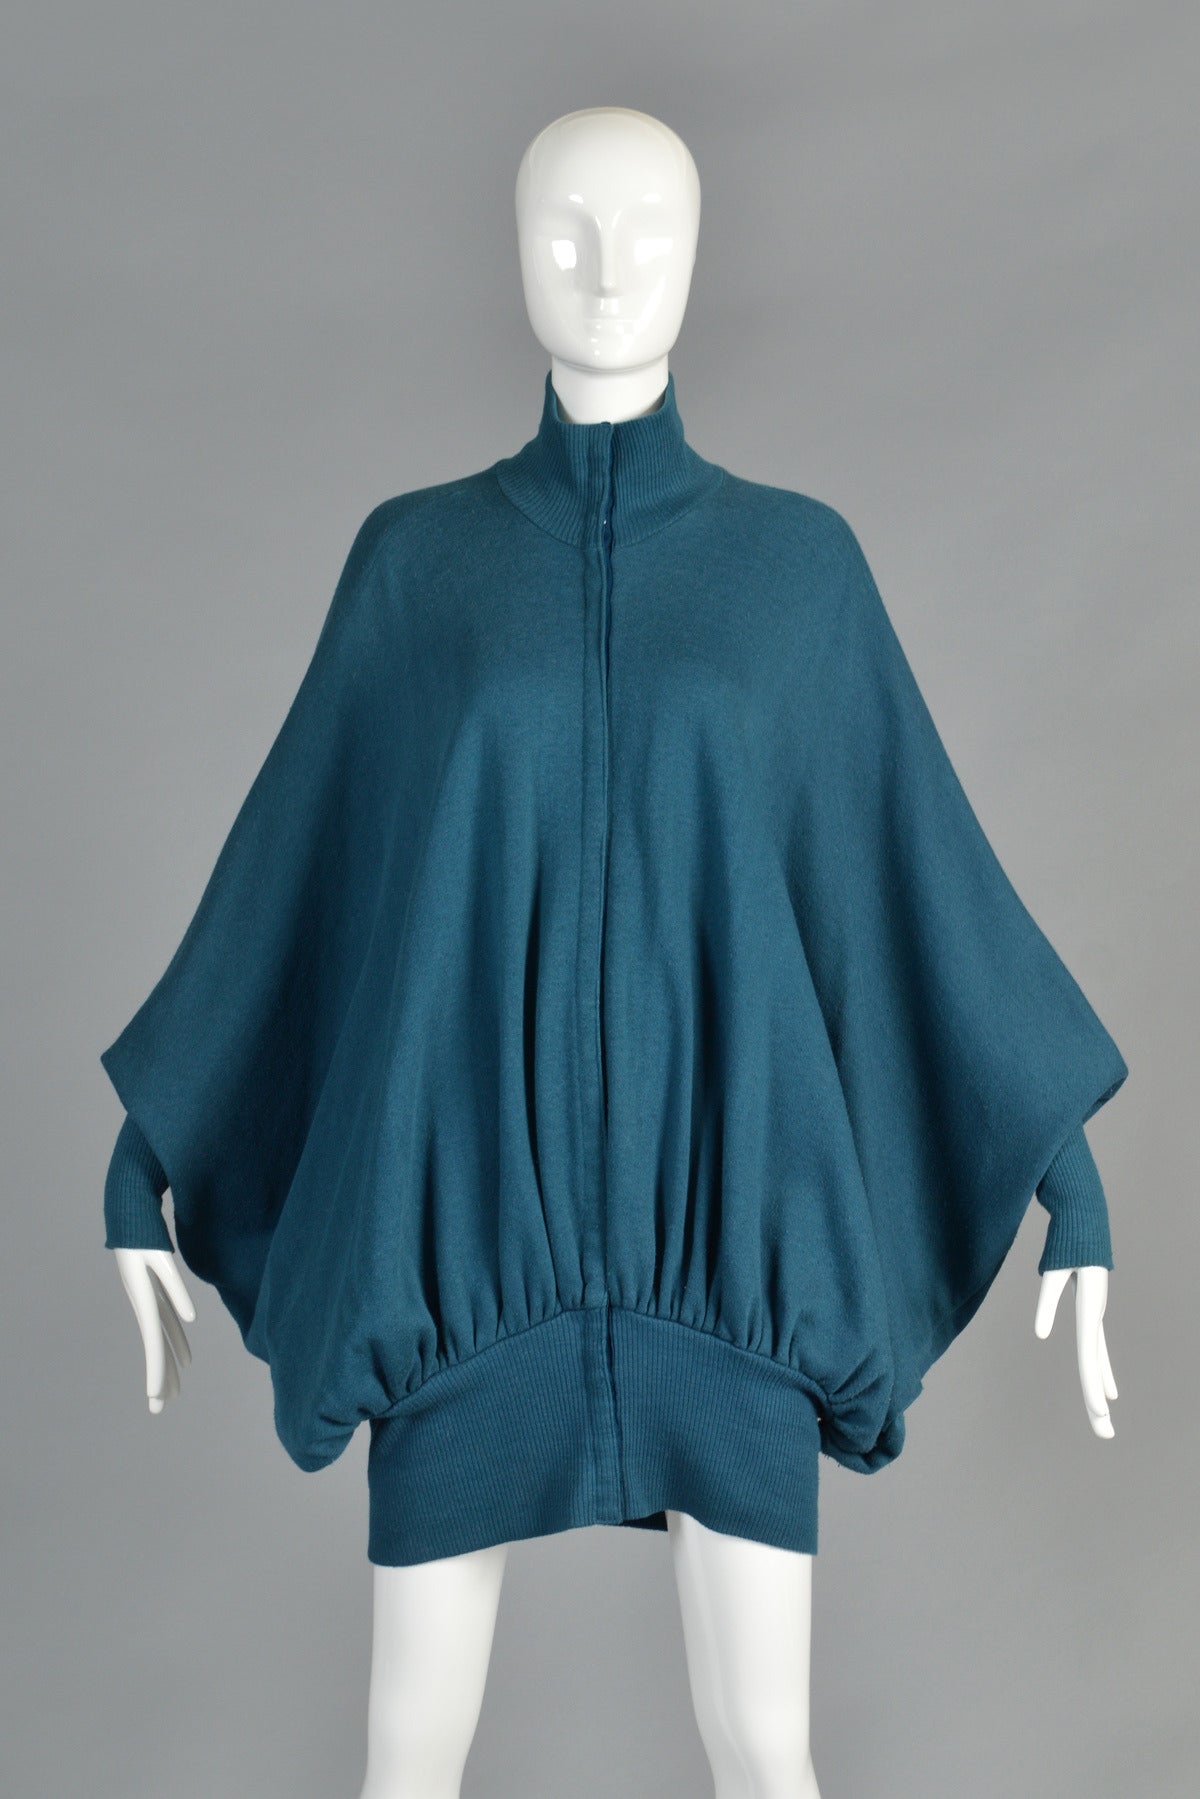 Norma Kamali Avant Garde Draped Batwing Knit Jacket 1